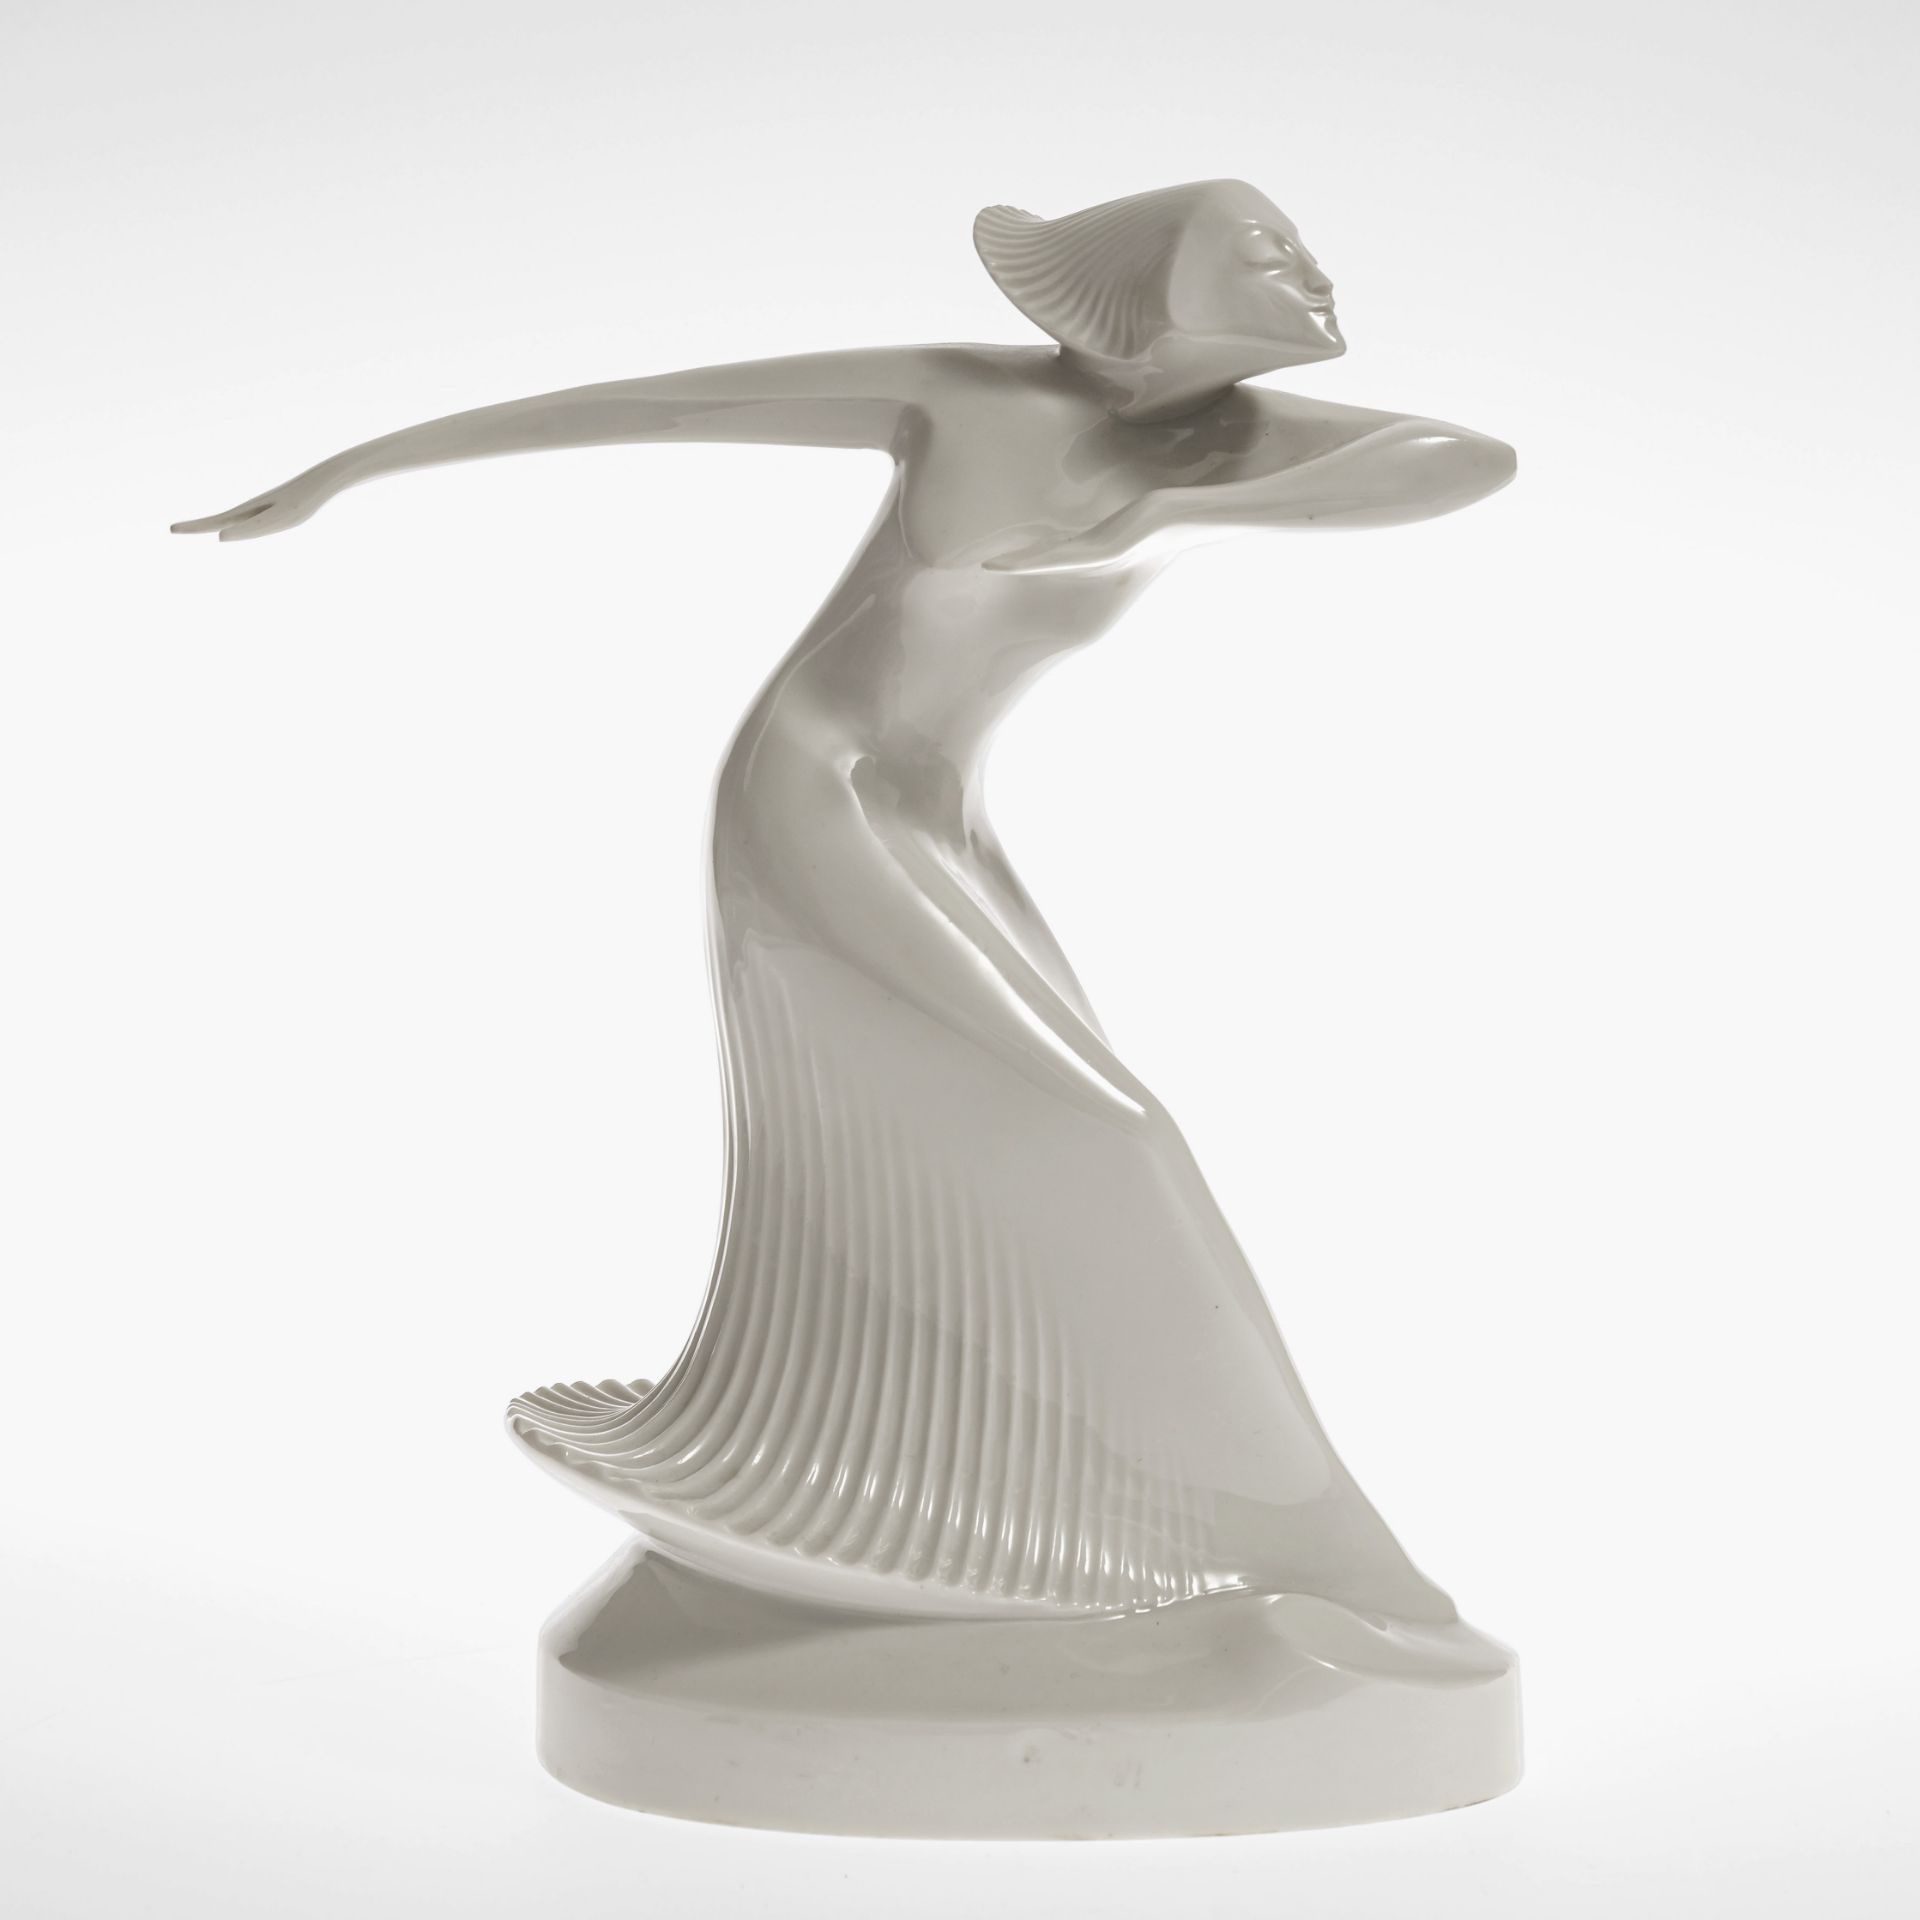 The dancer "Gertrud Leistikow" - Hutschenreuther, Selb-Bavaria, 1932-1940, design by Theo Vos, 1926